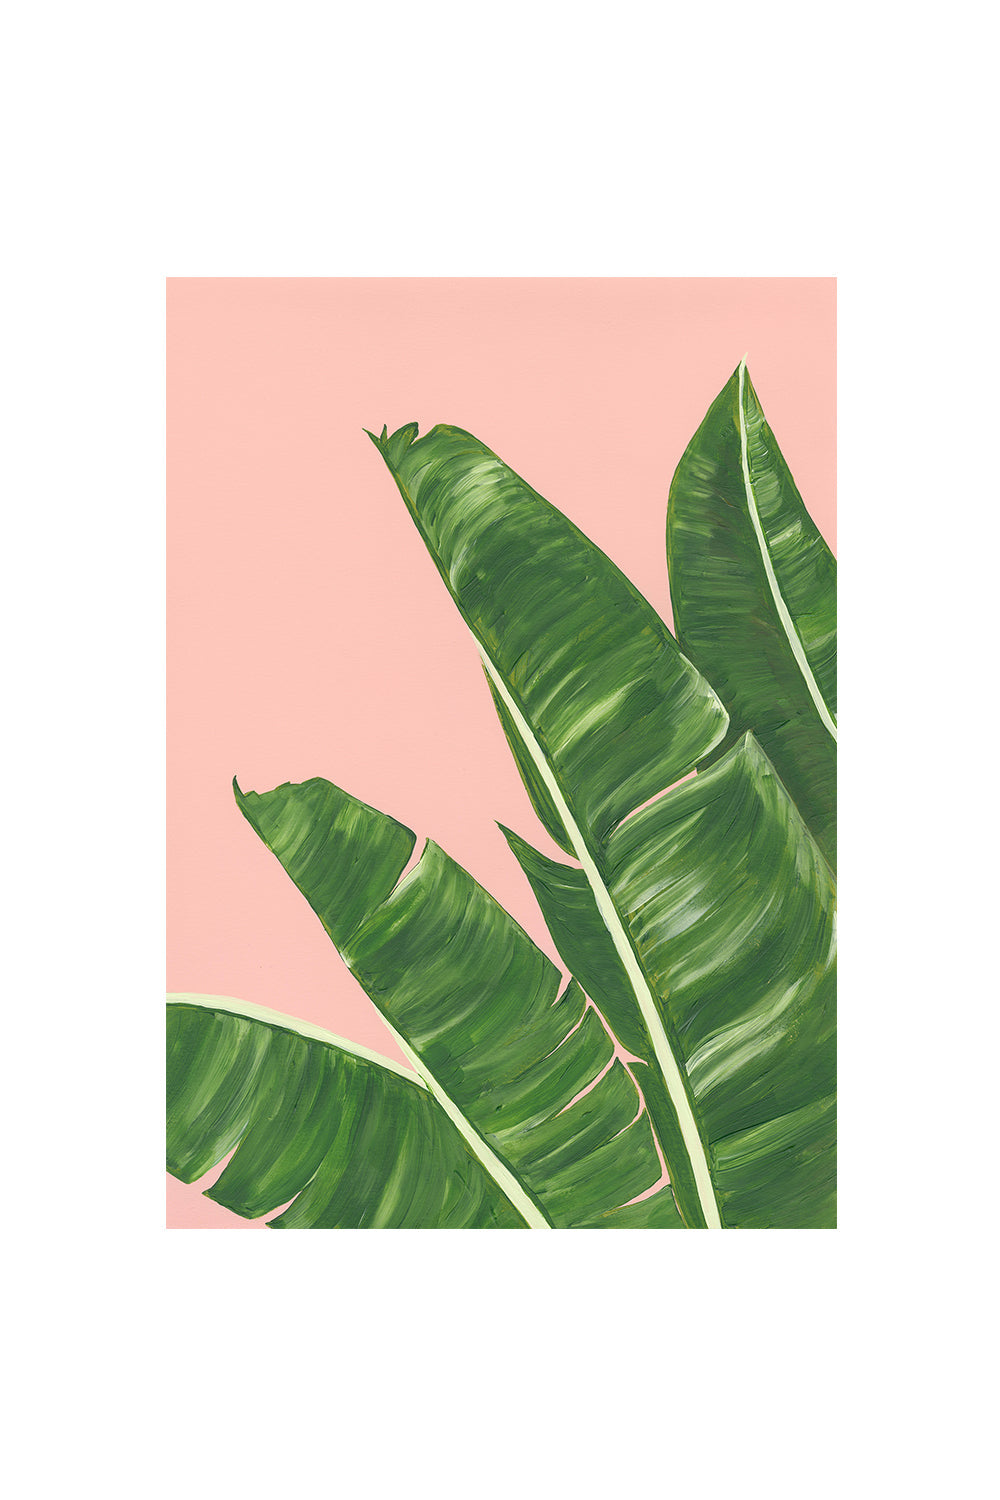 BANANA PLANT | CARD BY STENGUN DRAWINGS